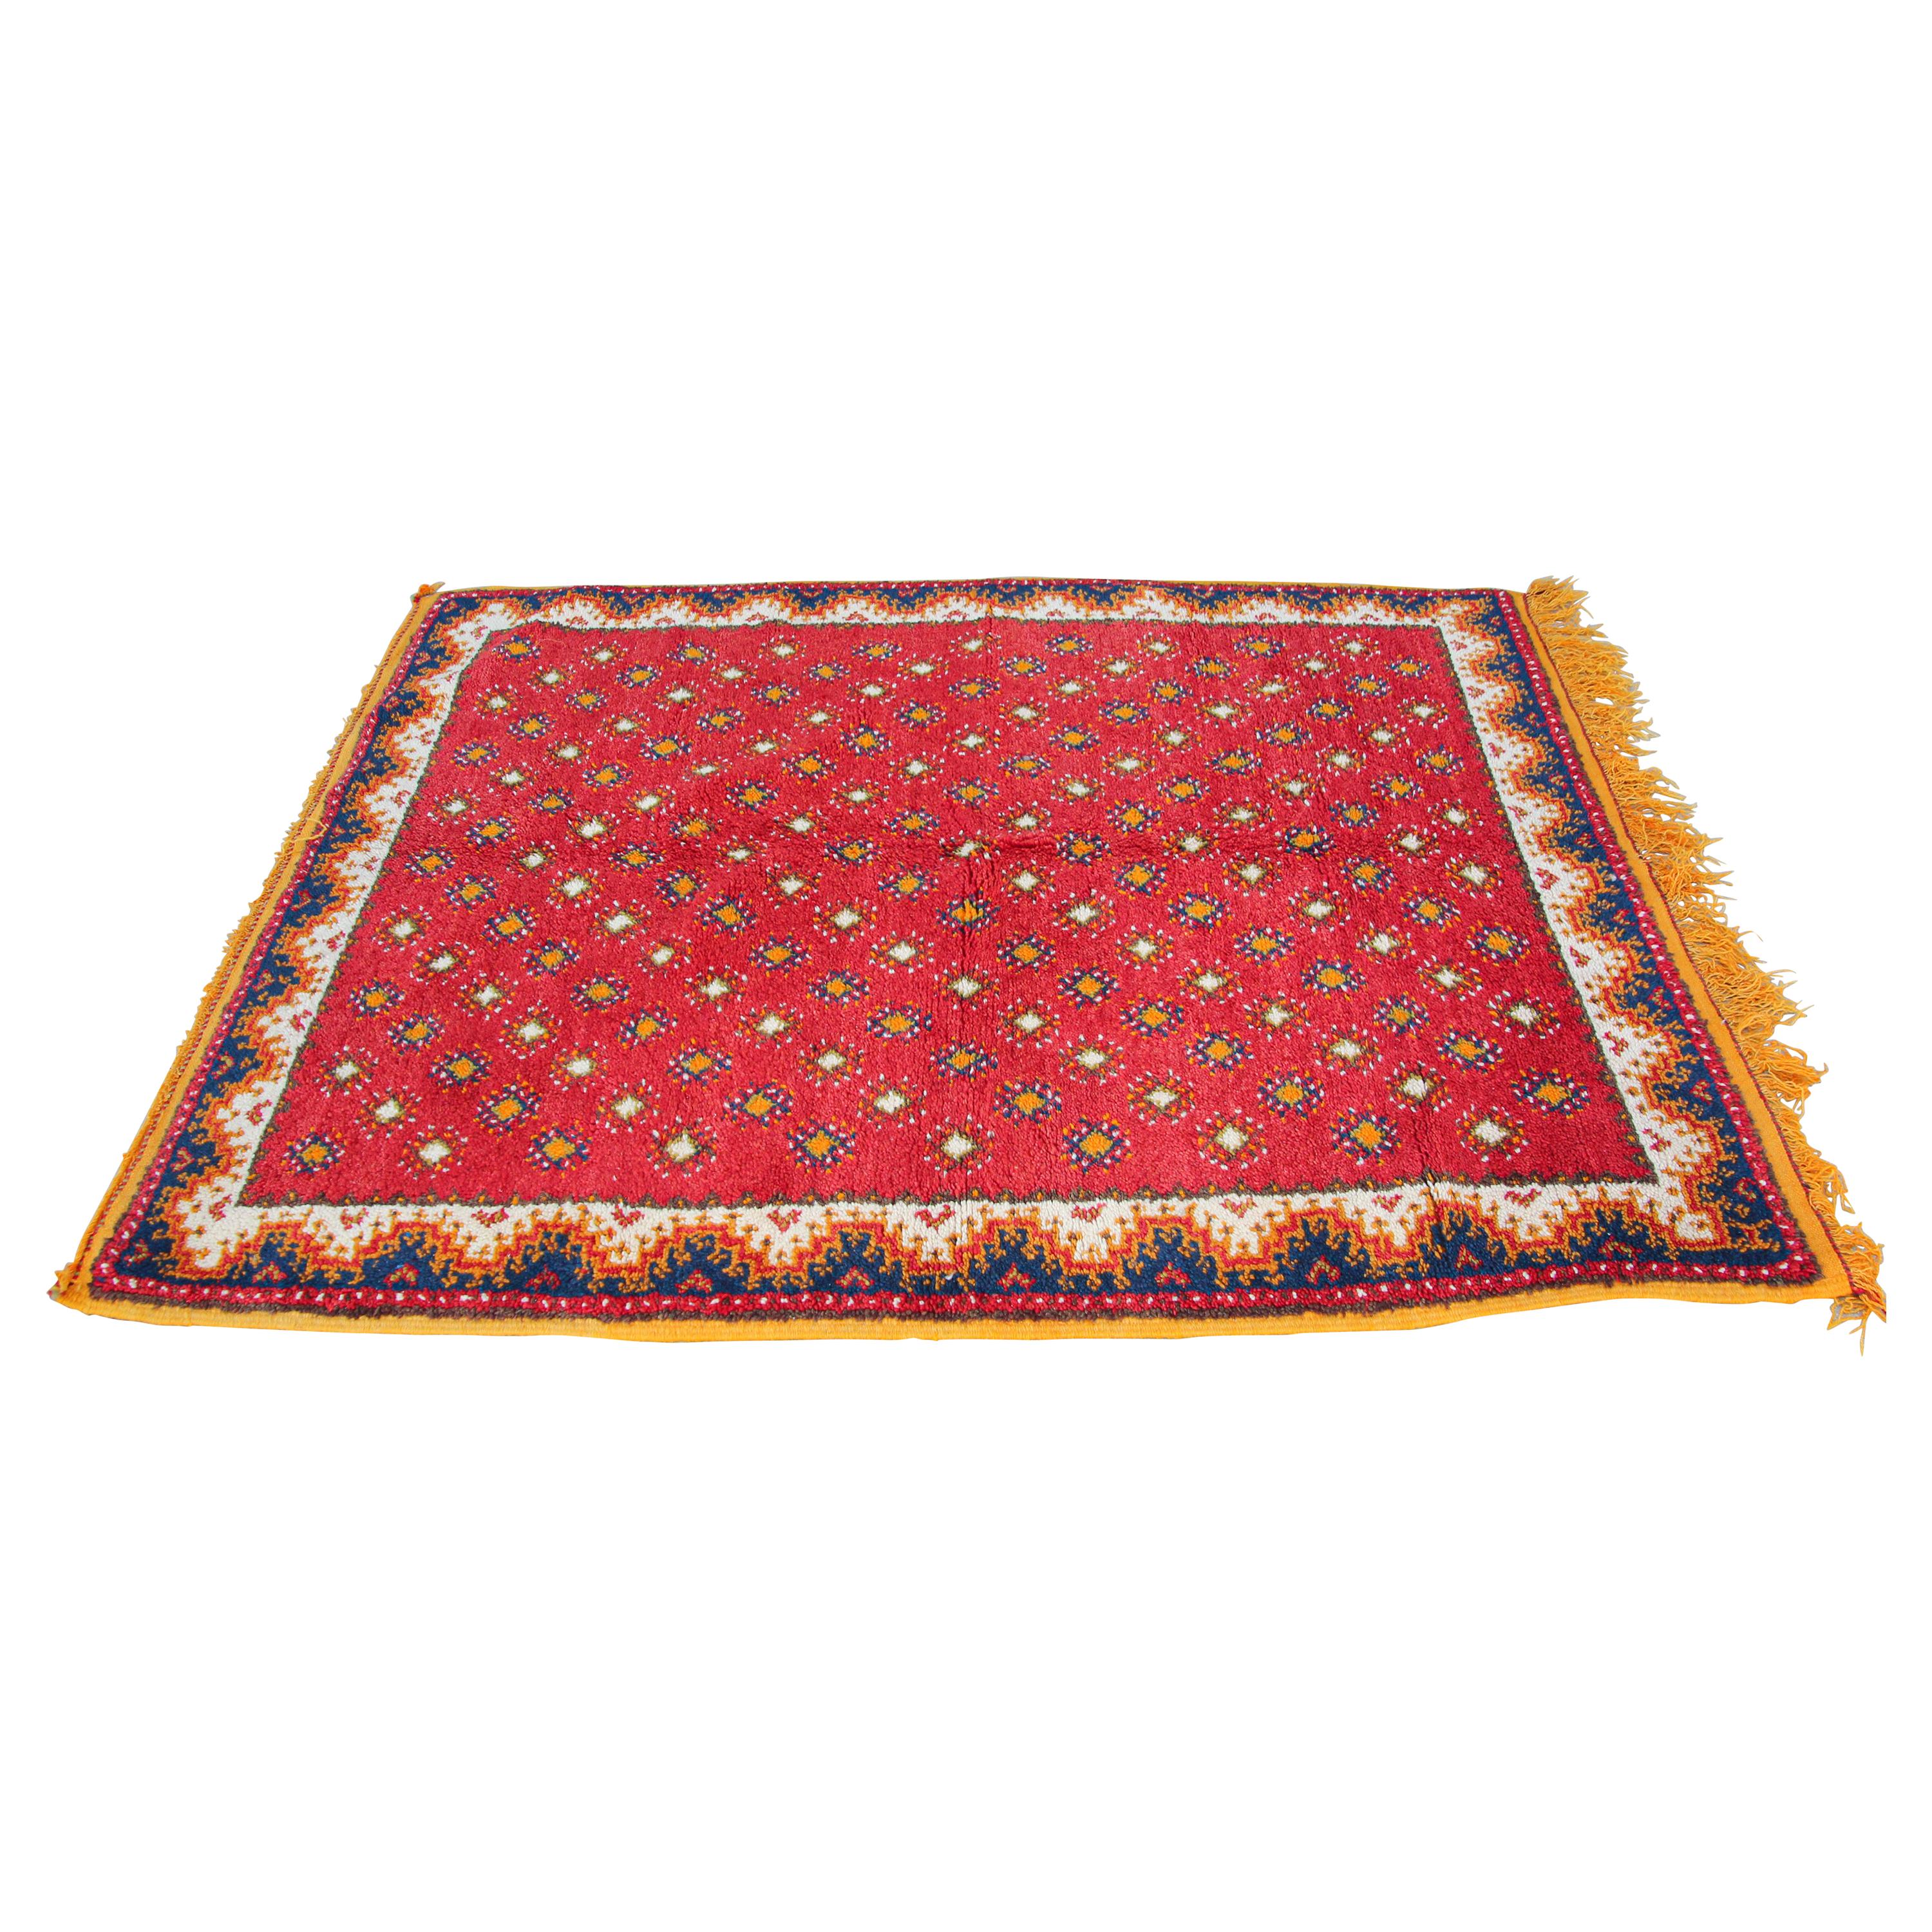 1960s Vintage Moroccan Hand-Woven Berber Carpet For Sale